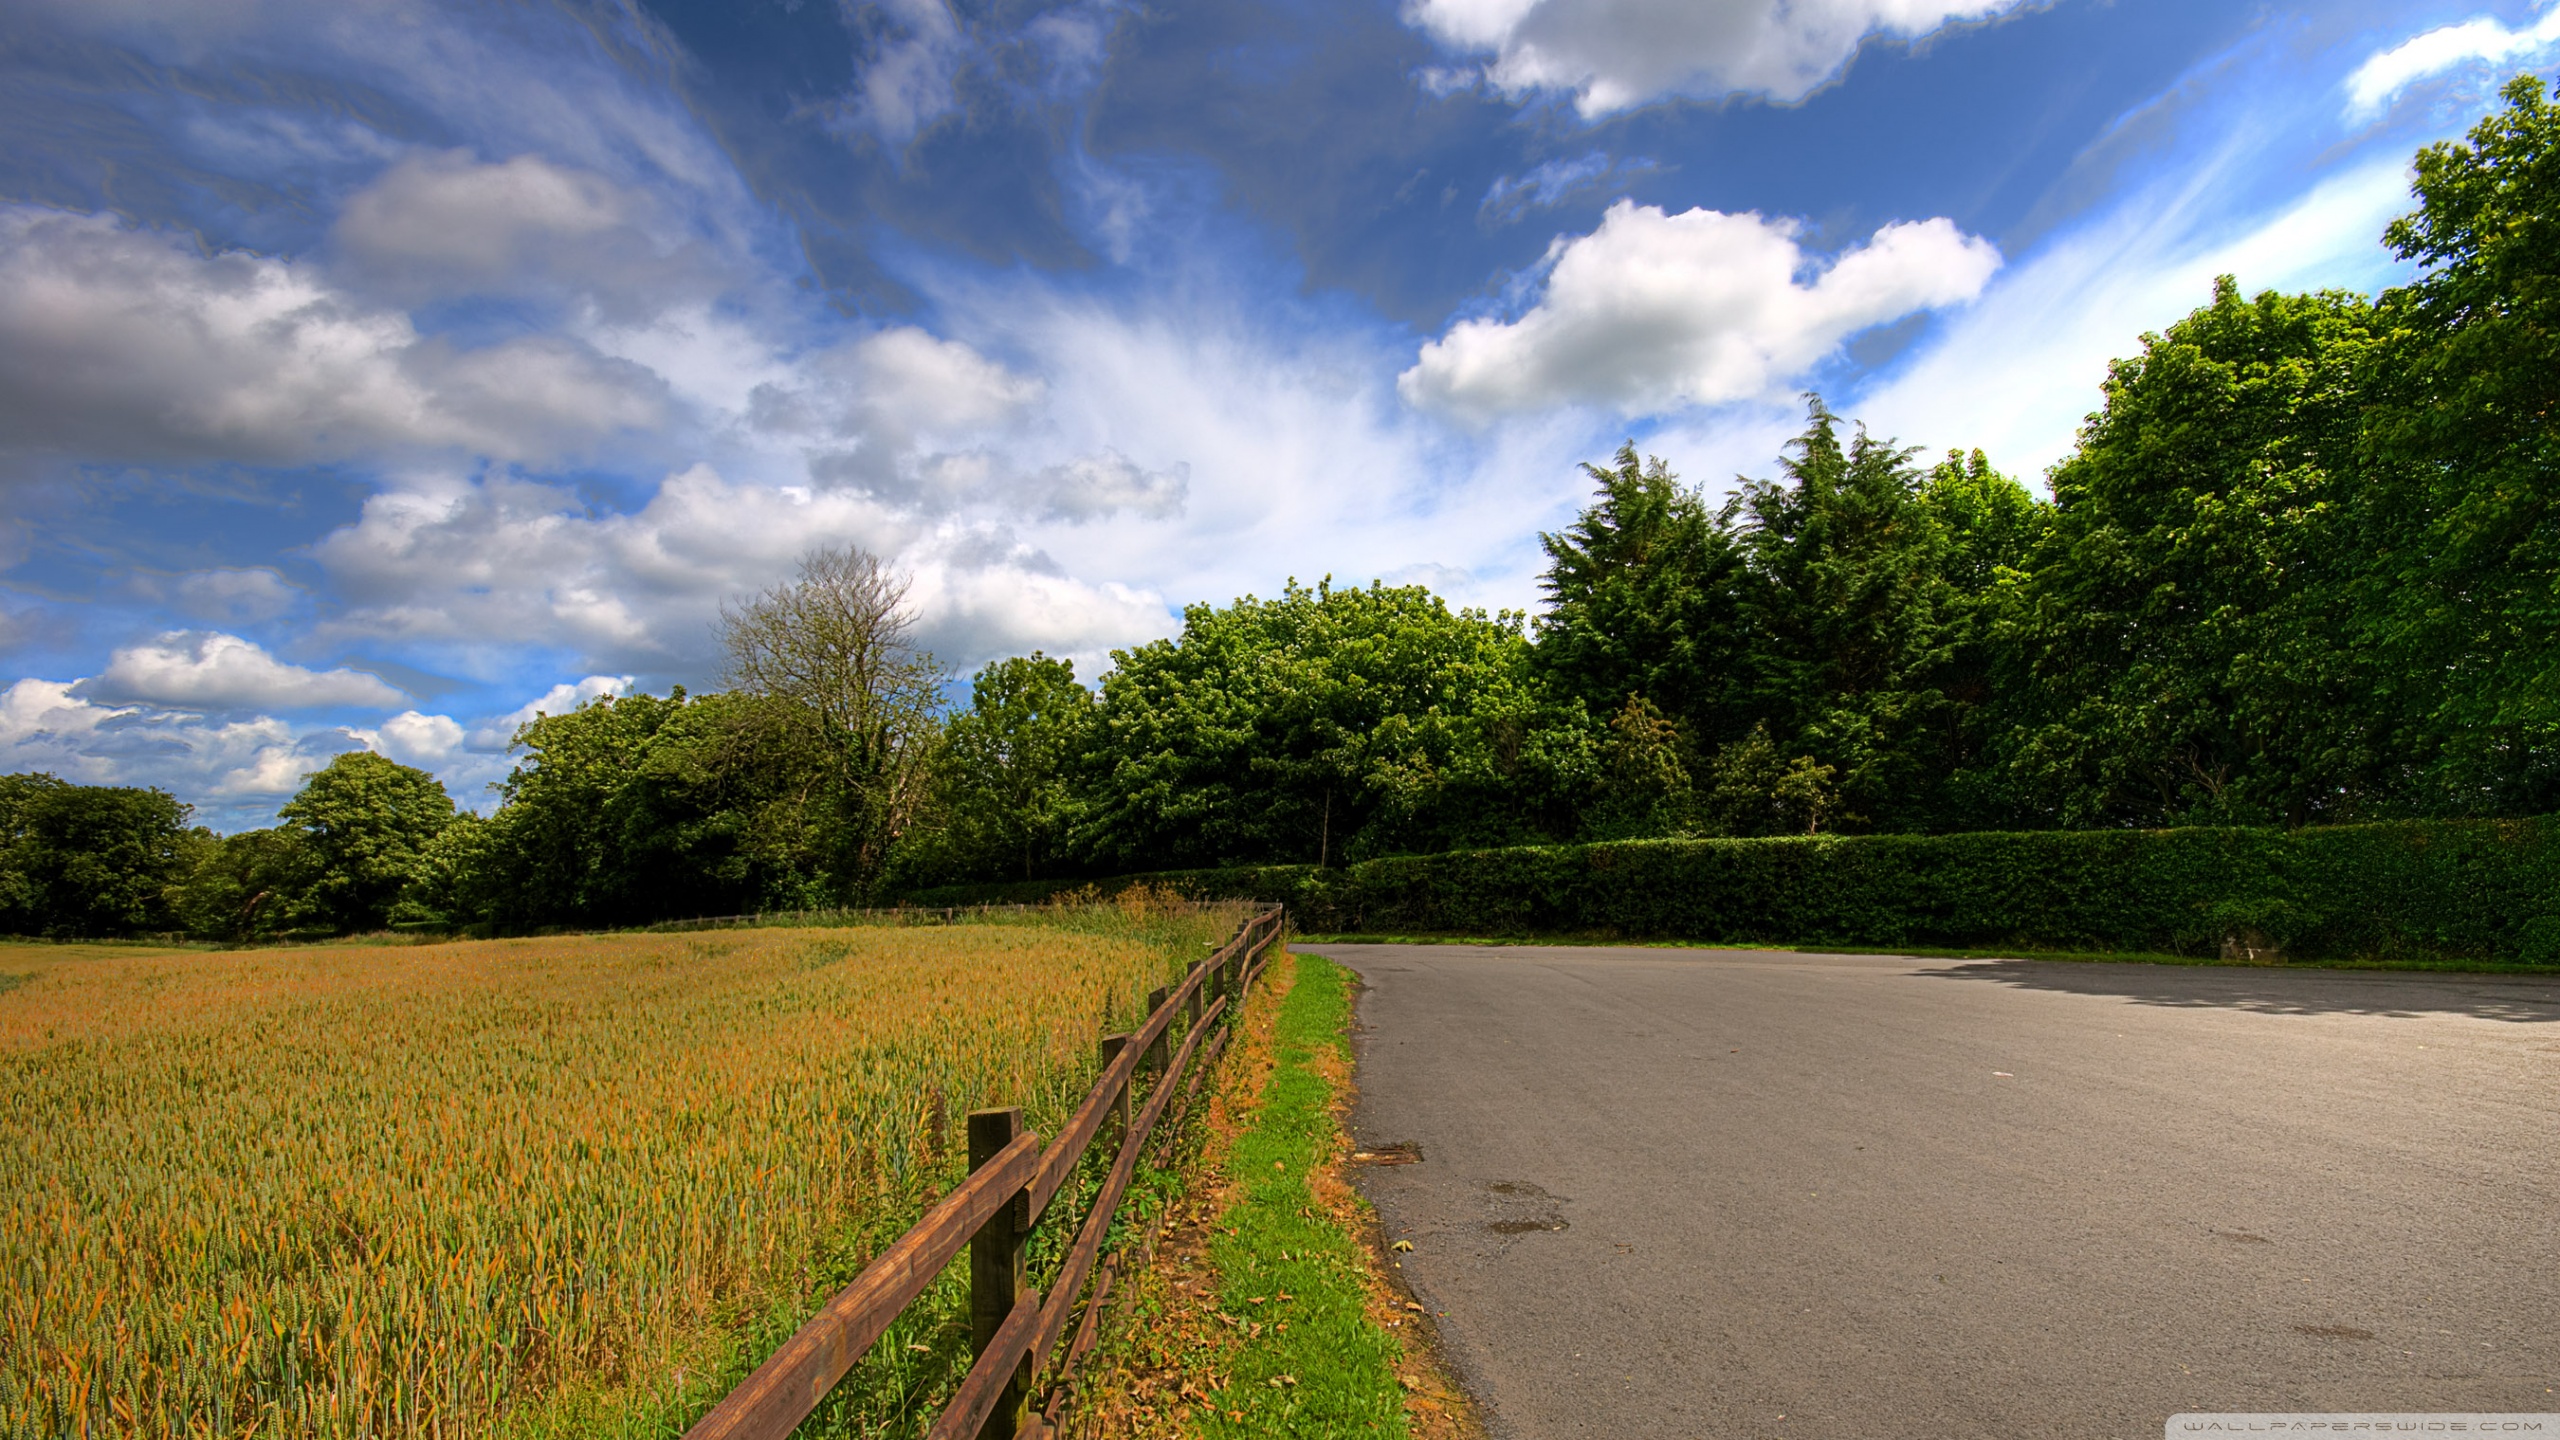 Countryside walks. Сельская дорога в Англии. Дорога в деревне. Проселочная дорога. Красивая дорога в деревне.